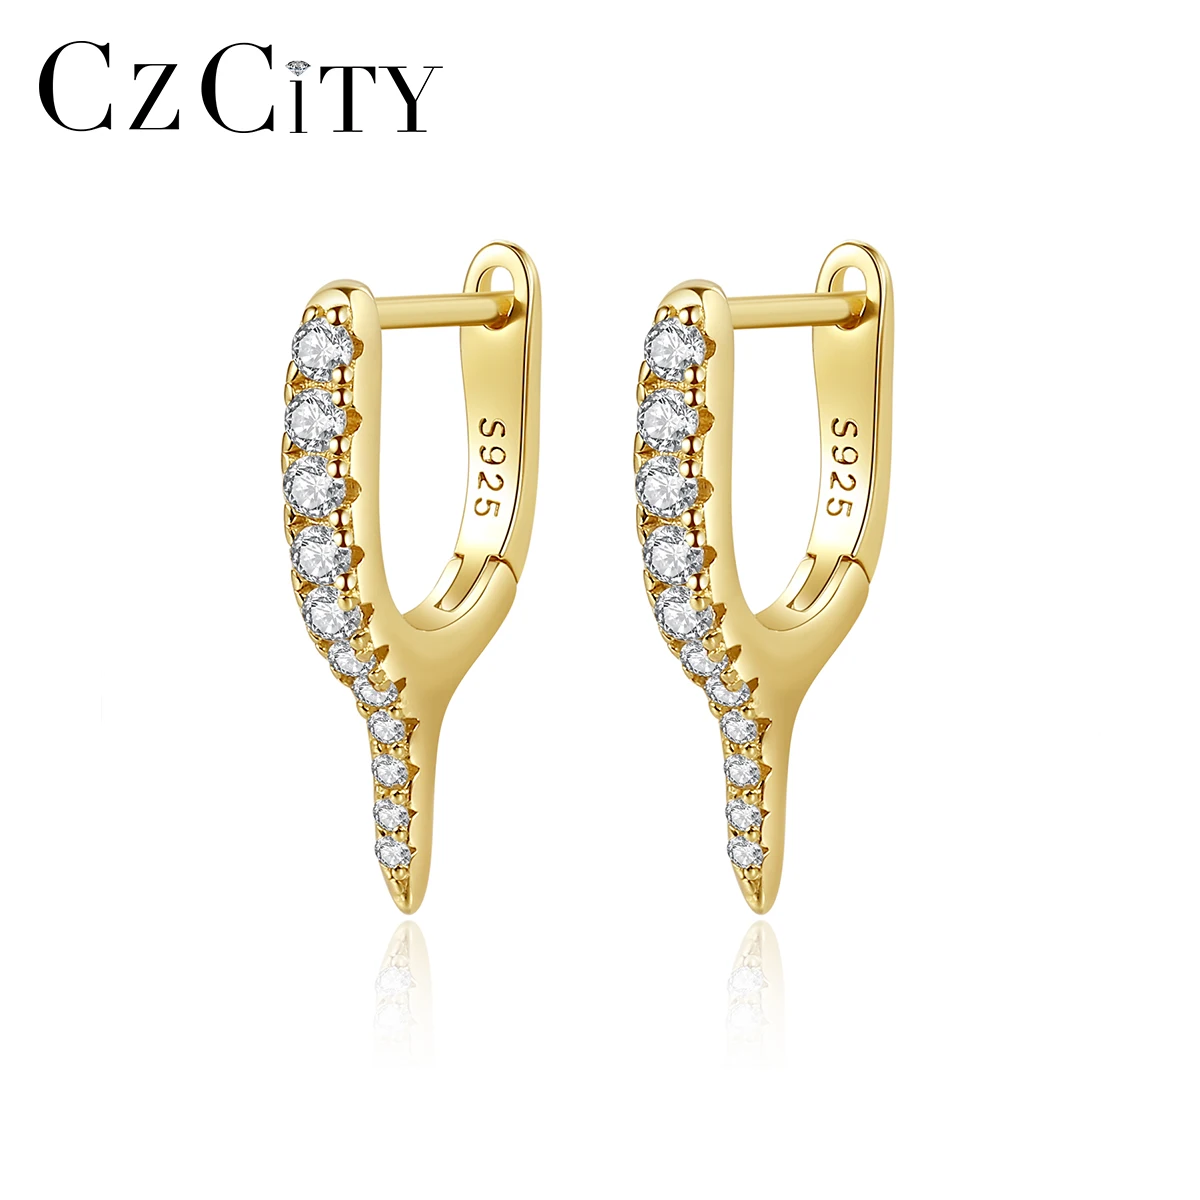 

CZCITY 925 Sterling Silver Golden Hoop Earrings for Women Fine Jewelry Rivet Circle Huggies Full CZ Brincos Femme Christmas Gift